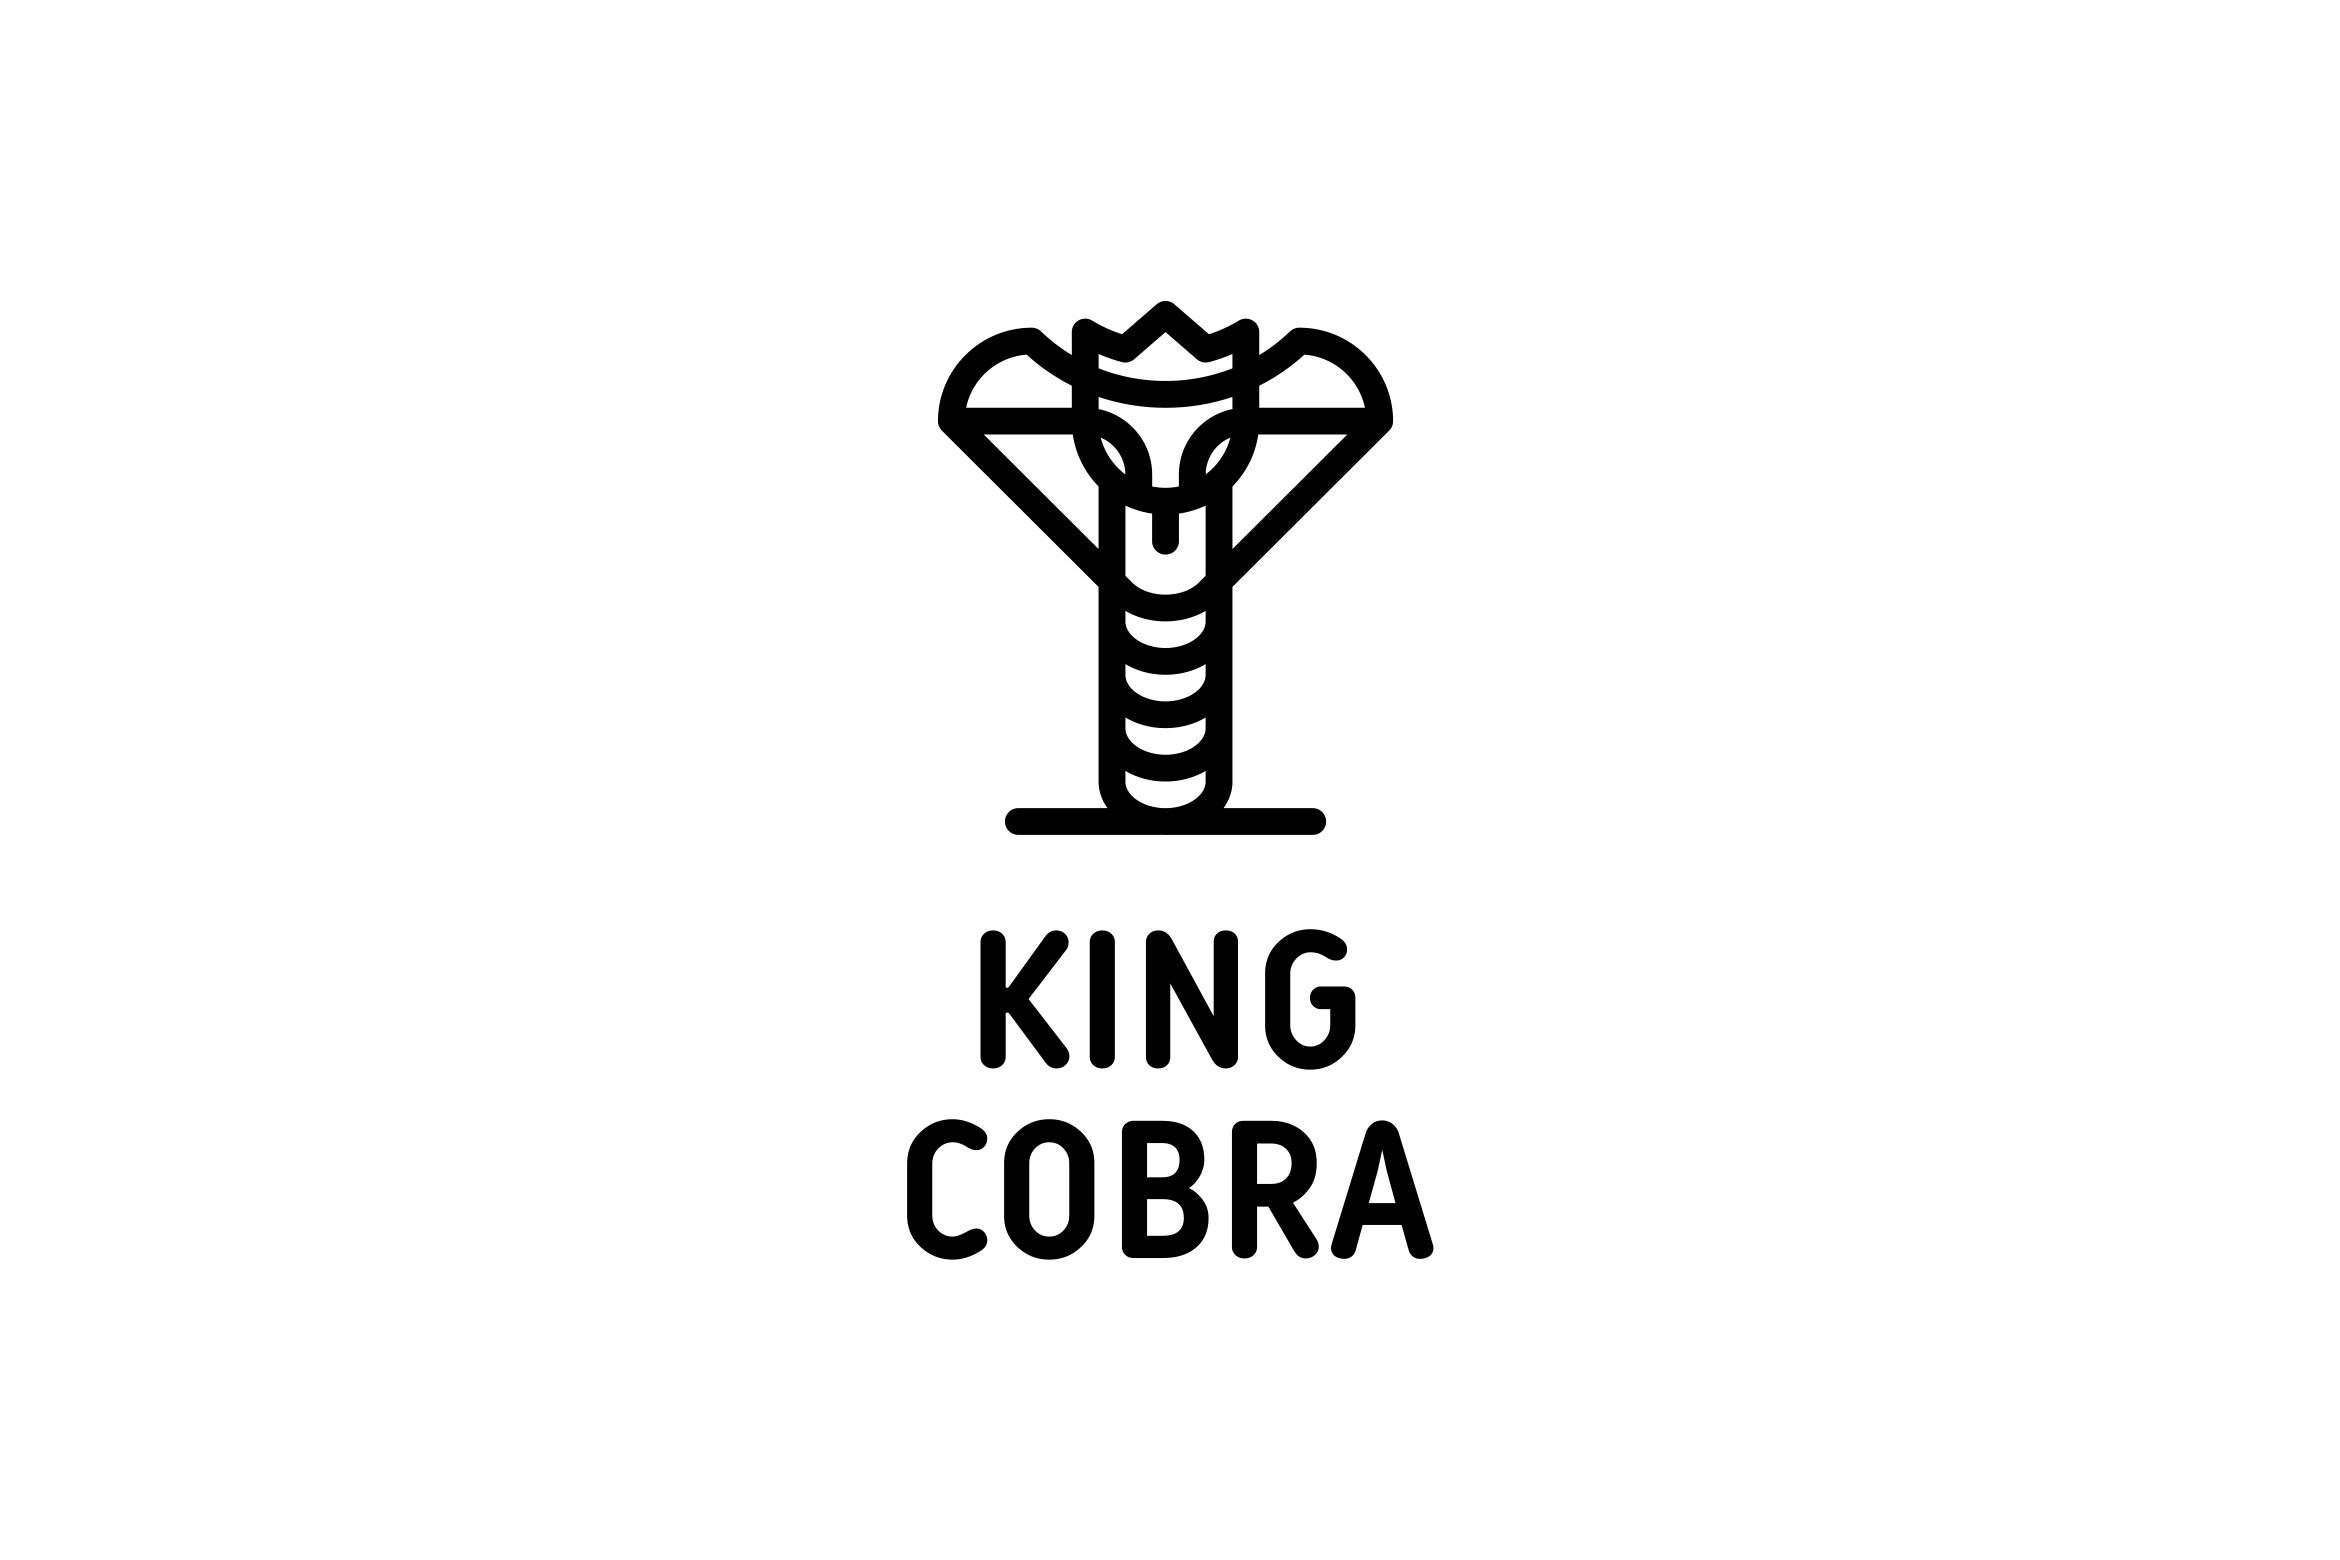 King Cobra Logo cover image.